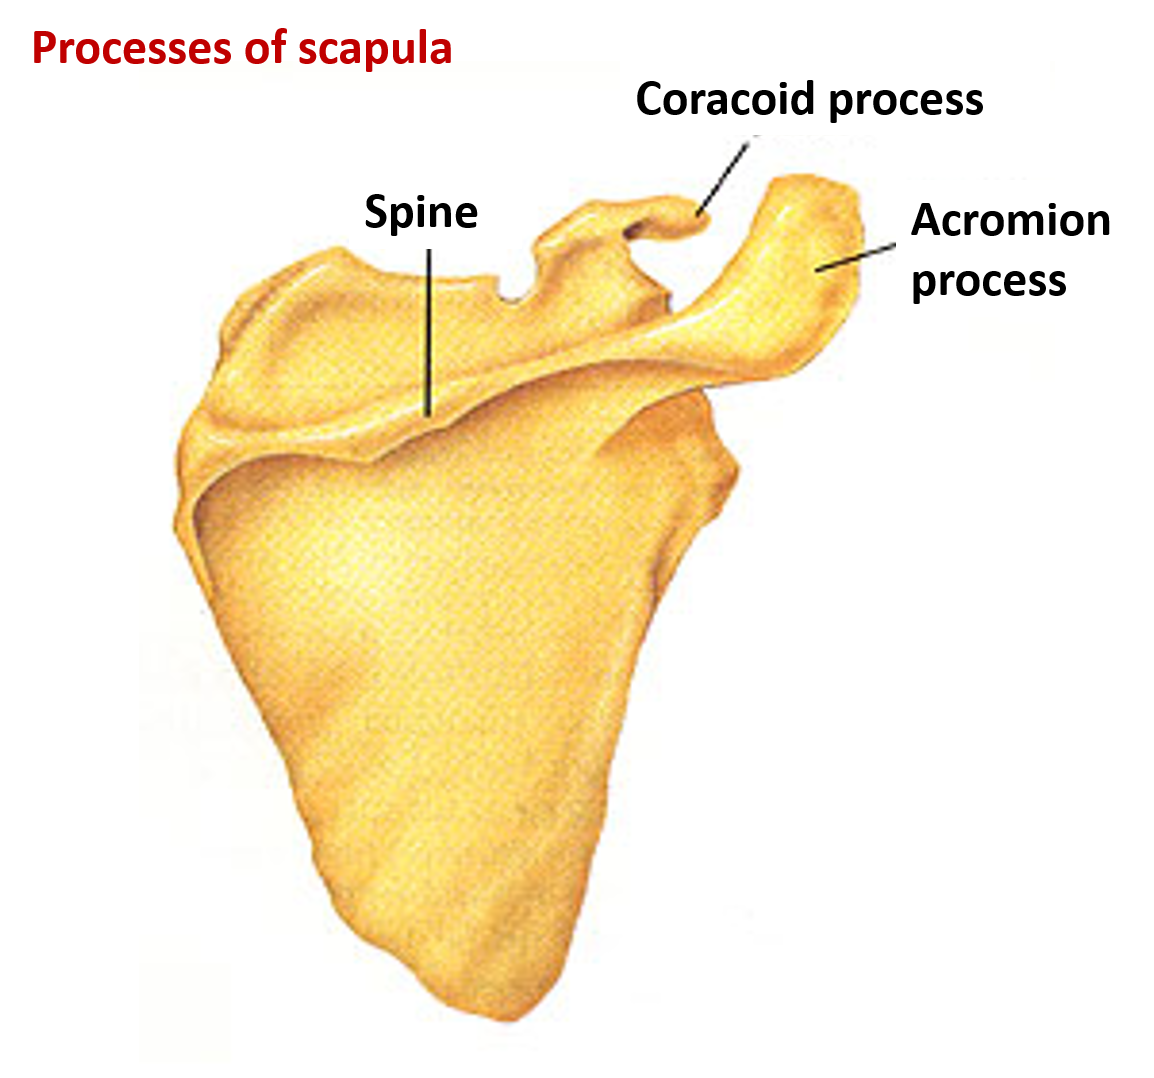 processes of scapula